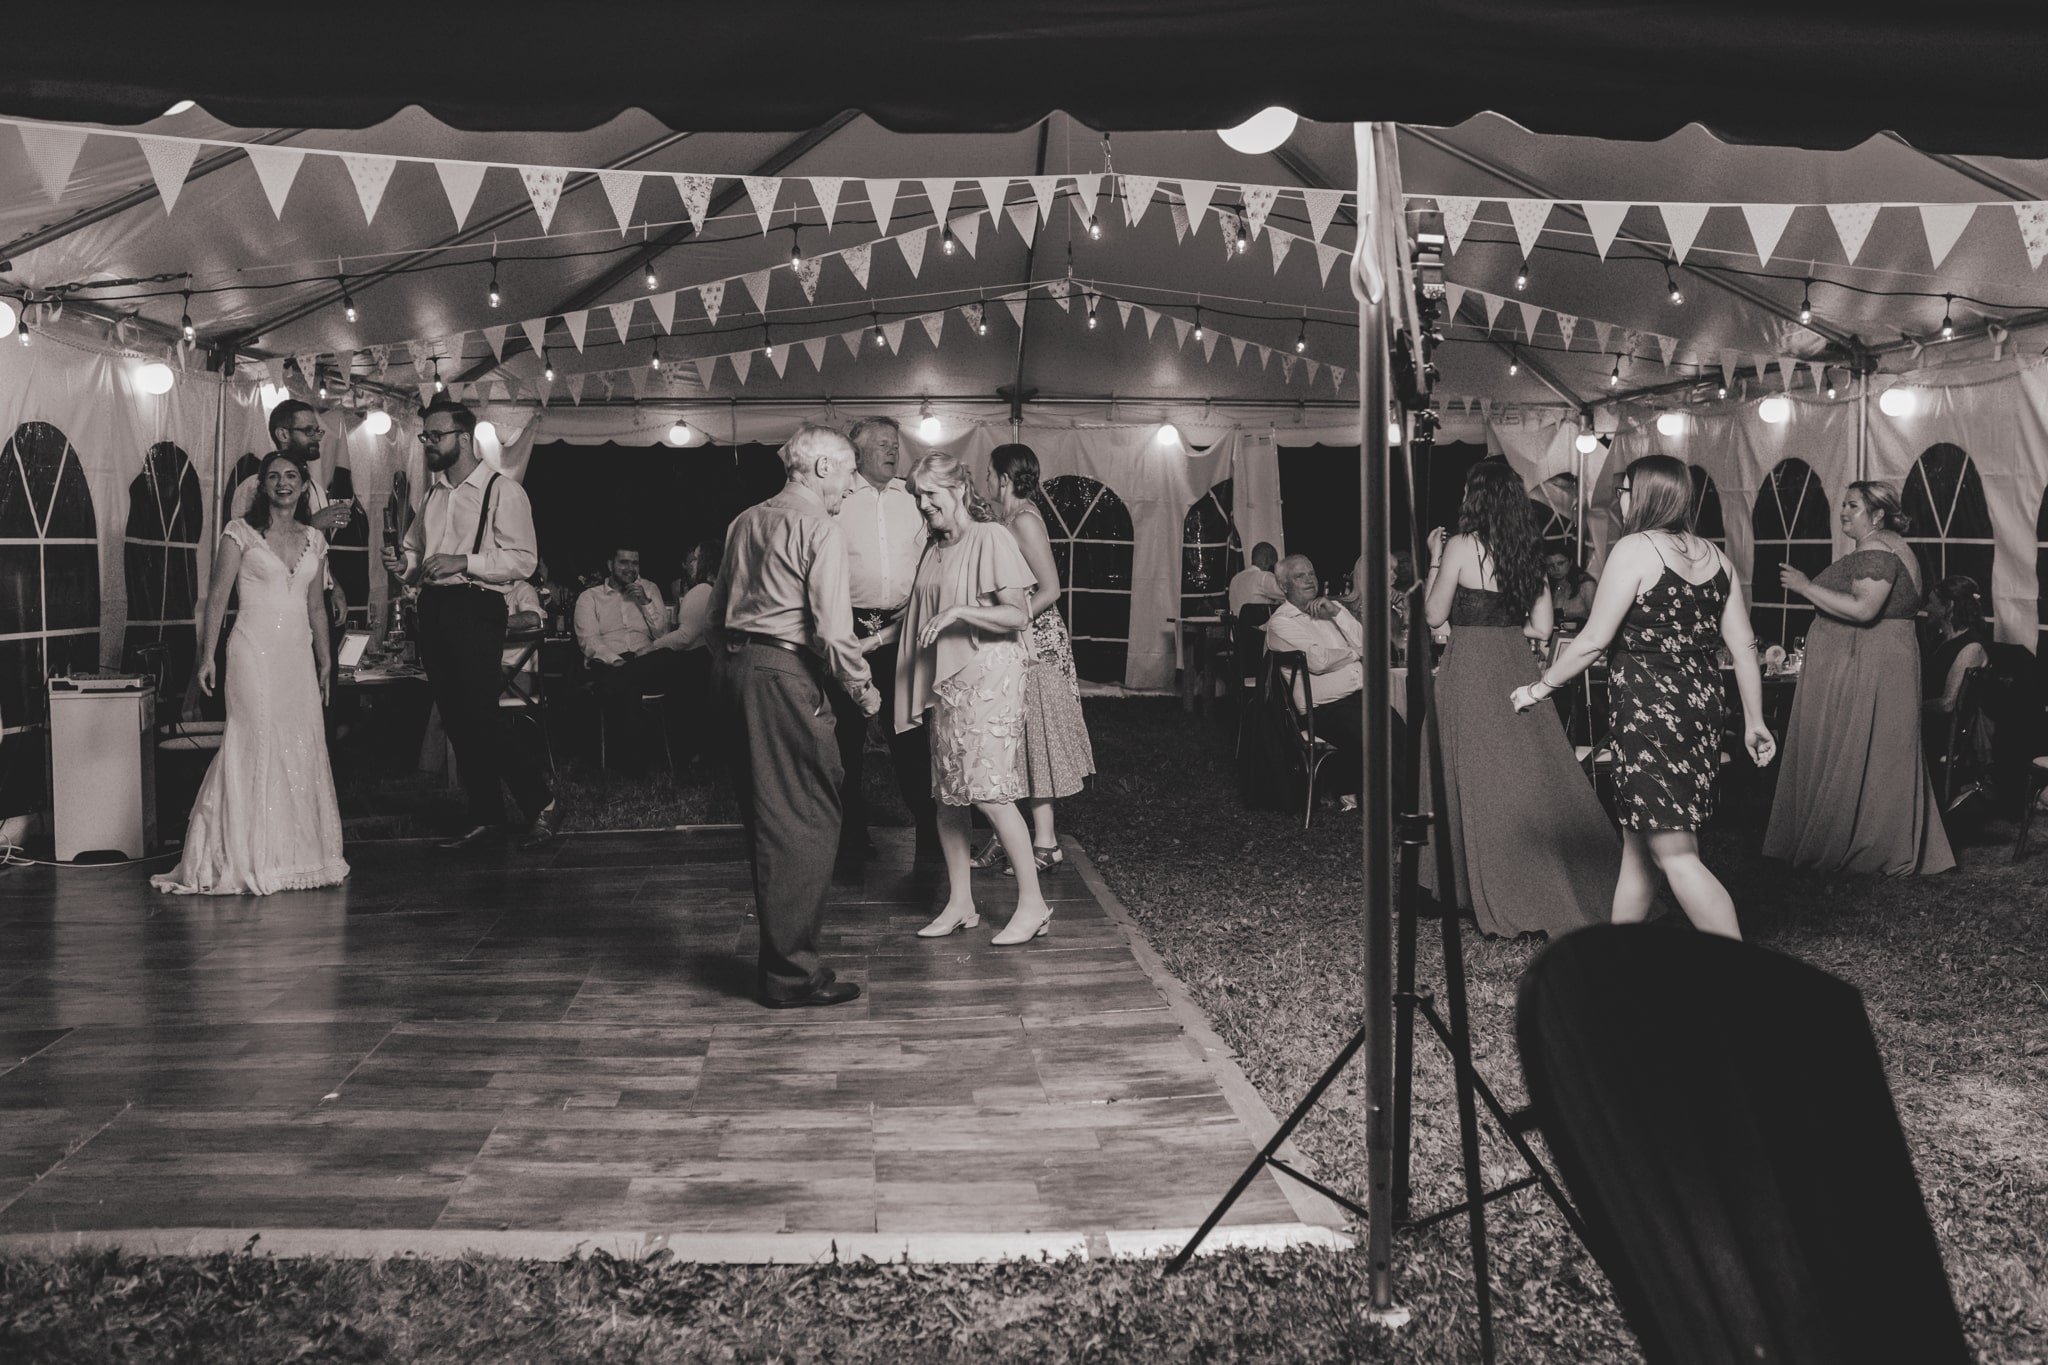 Guests dancing on dance floor at tented wedding reception